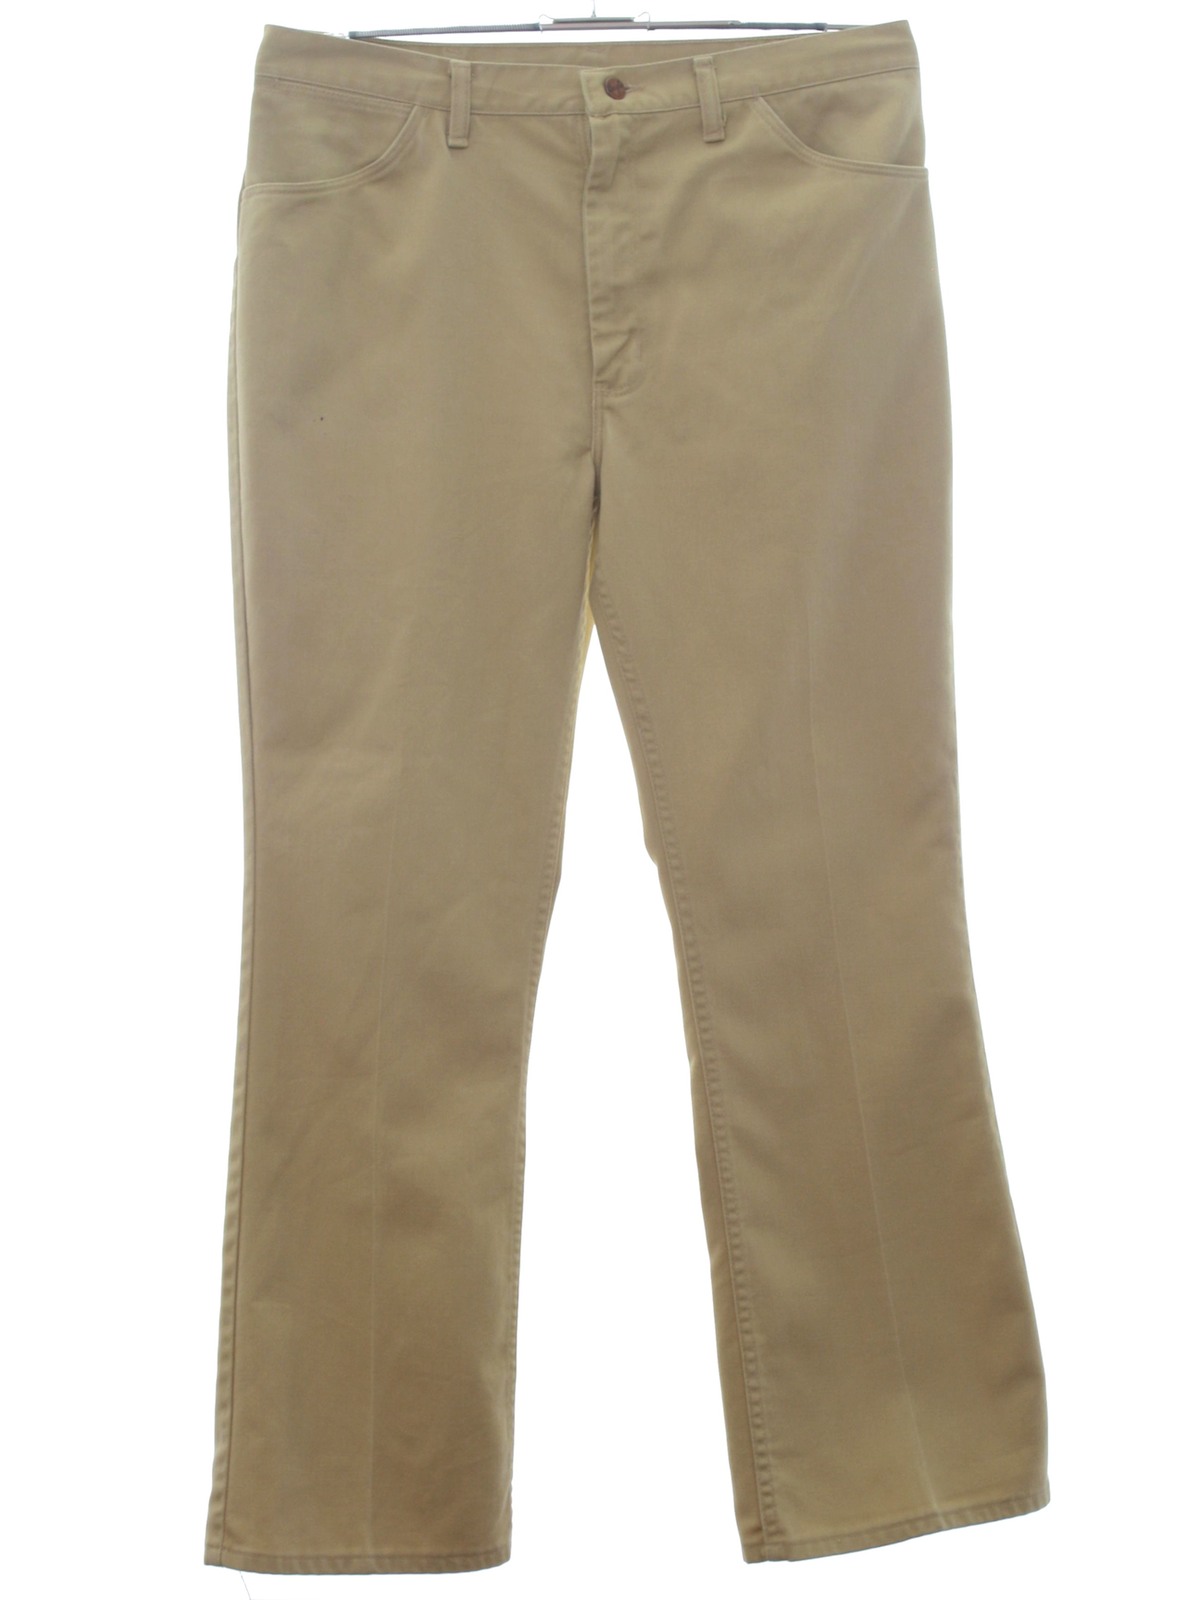 70s Retro Flared Pants / Flares: 70S -Wrangler- Mens light tan cotton ...